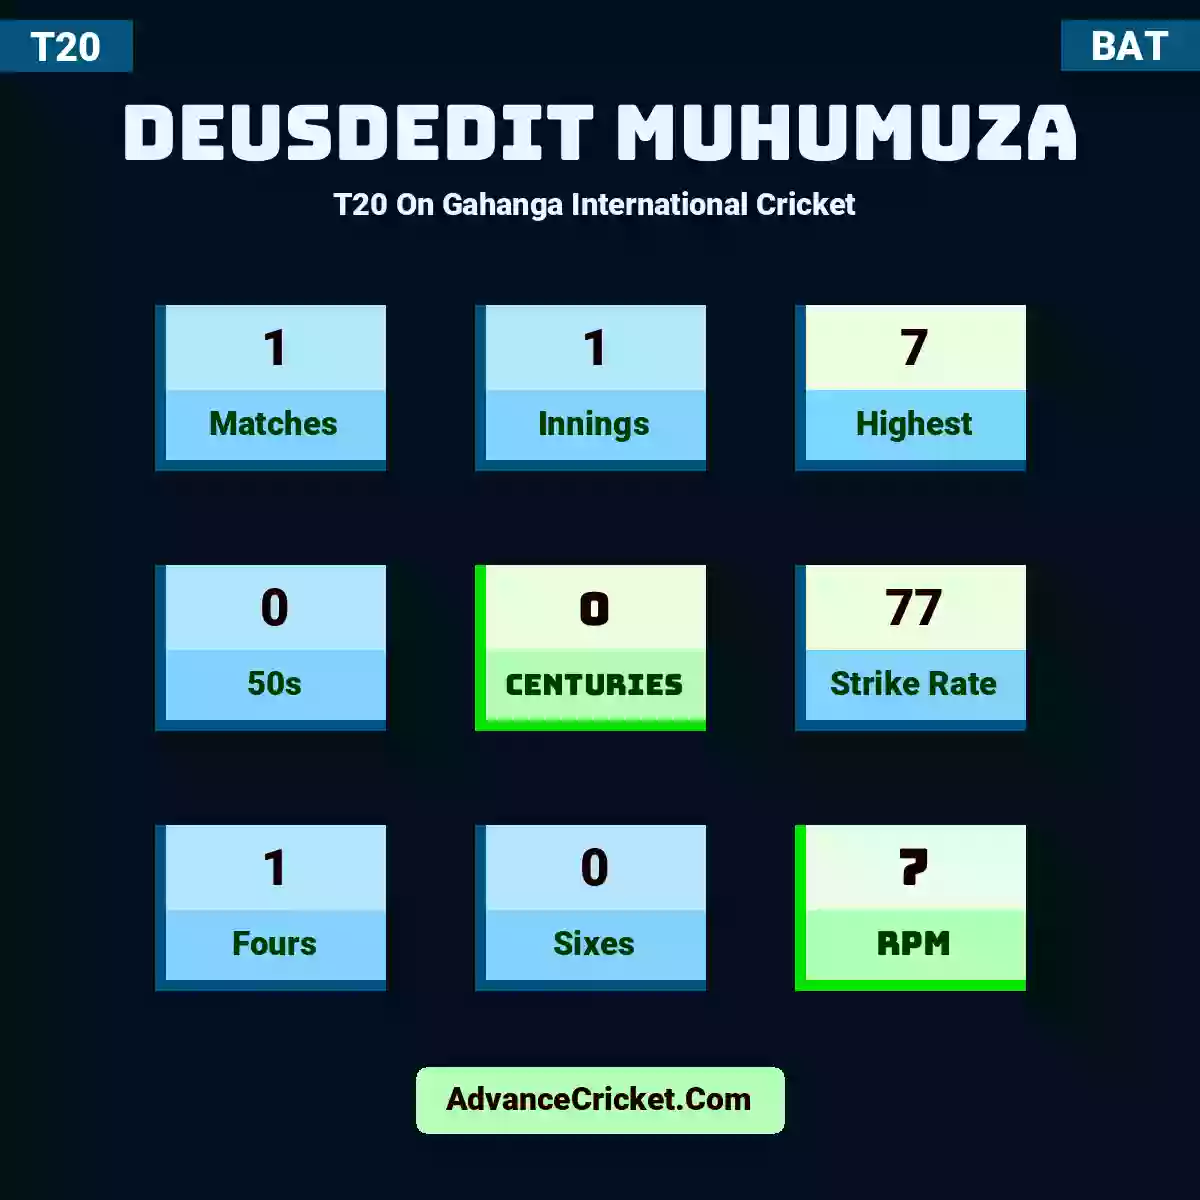 Deusdedit Muhumuza T20  On Gahanga International Cricket , Deusdedit Muhumuza played 1 matches, scored 7 runs as highest, 0 half-centuries, and 0 centuries, with a strike rate of 77. D.Muhumuza hit 1 fours and 0 sixes, with an RPM of 7.